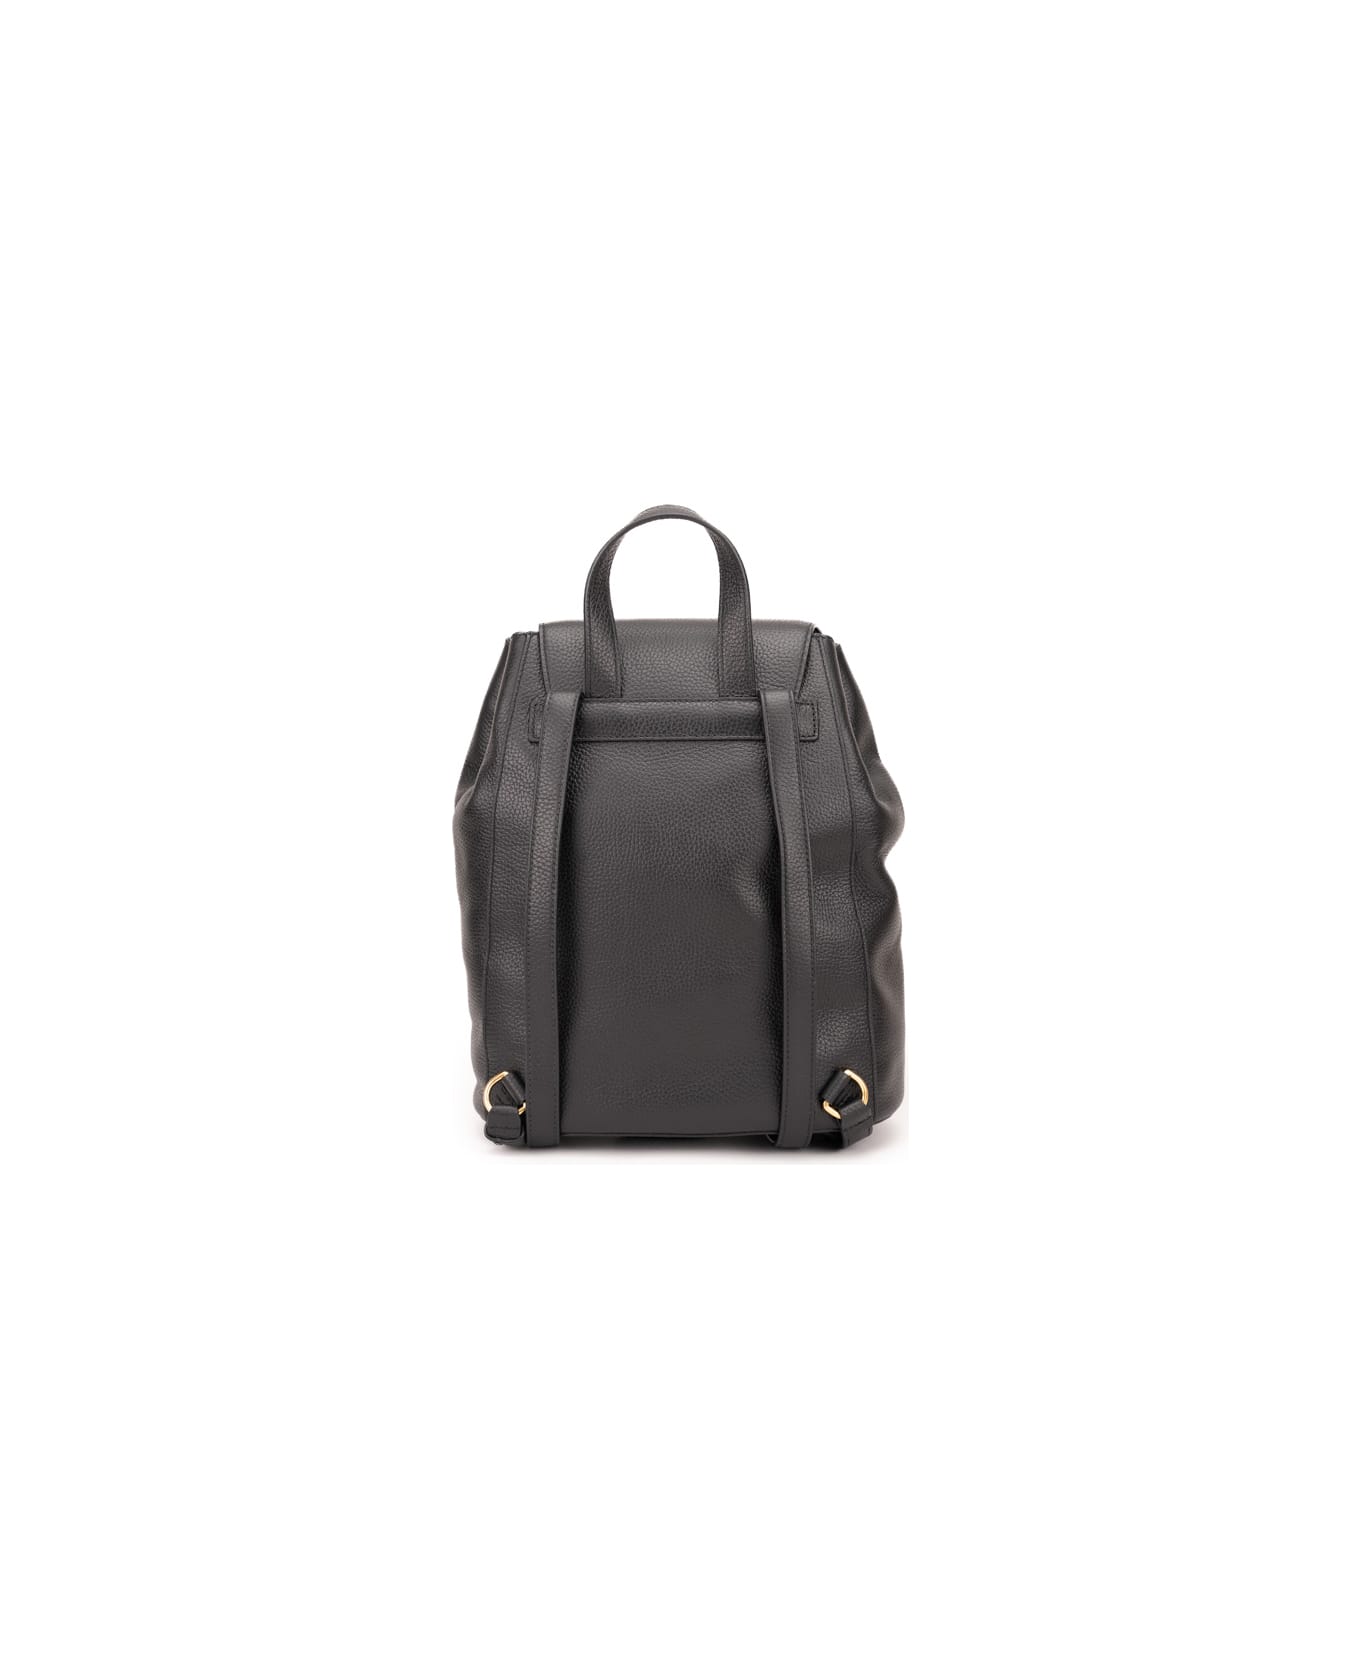 Coccinelle Hammered Leather Backpack - Noir バックパック